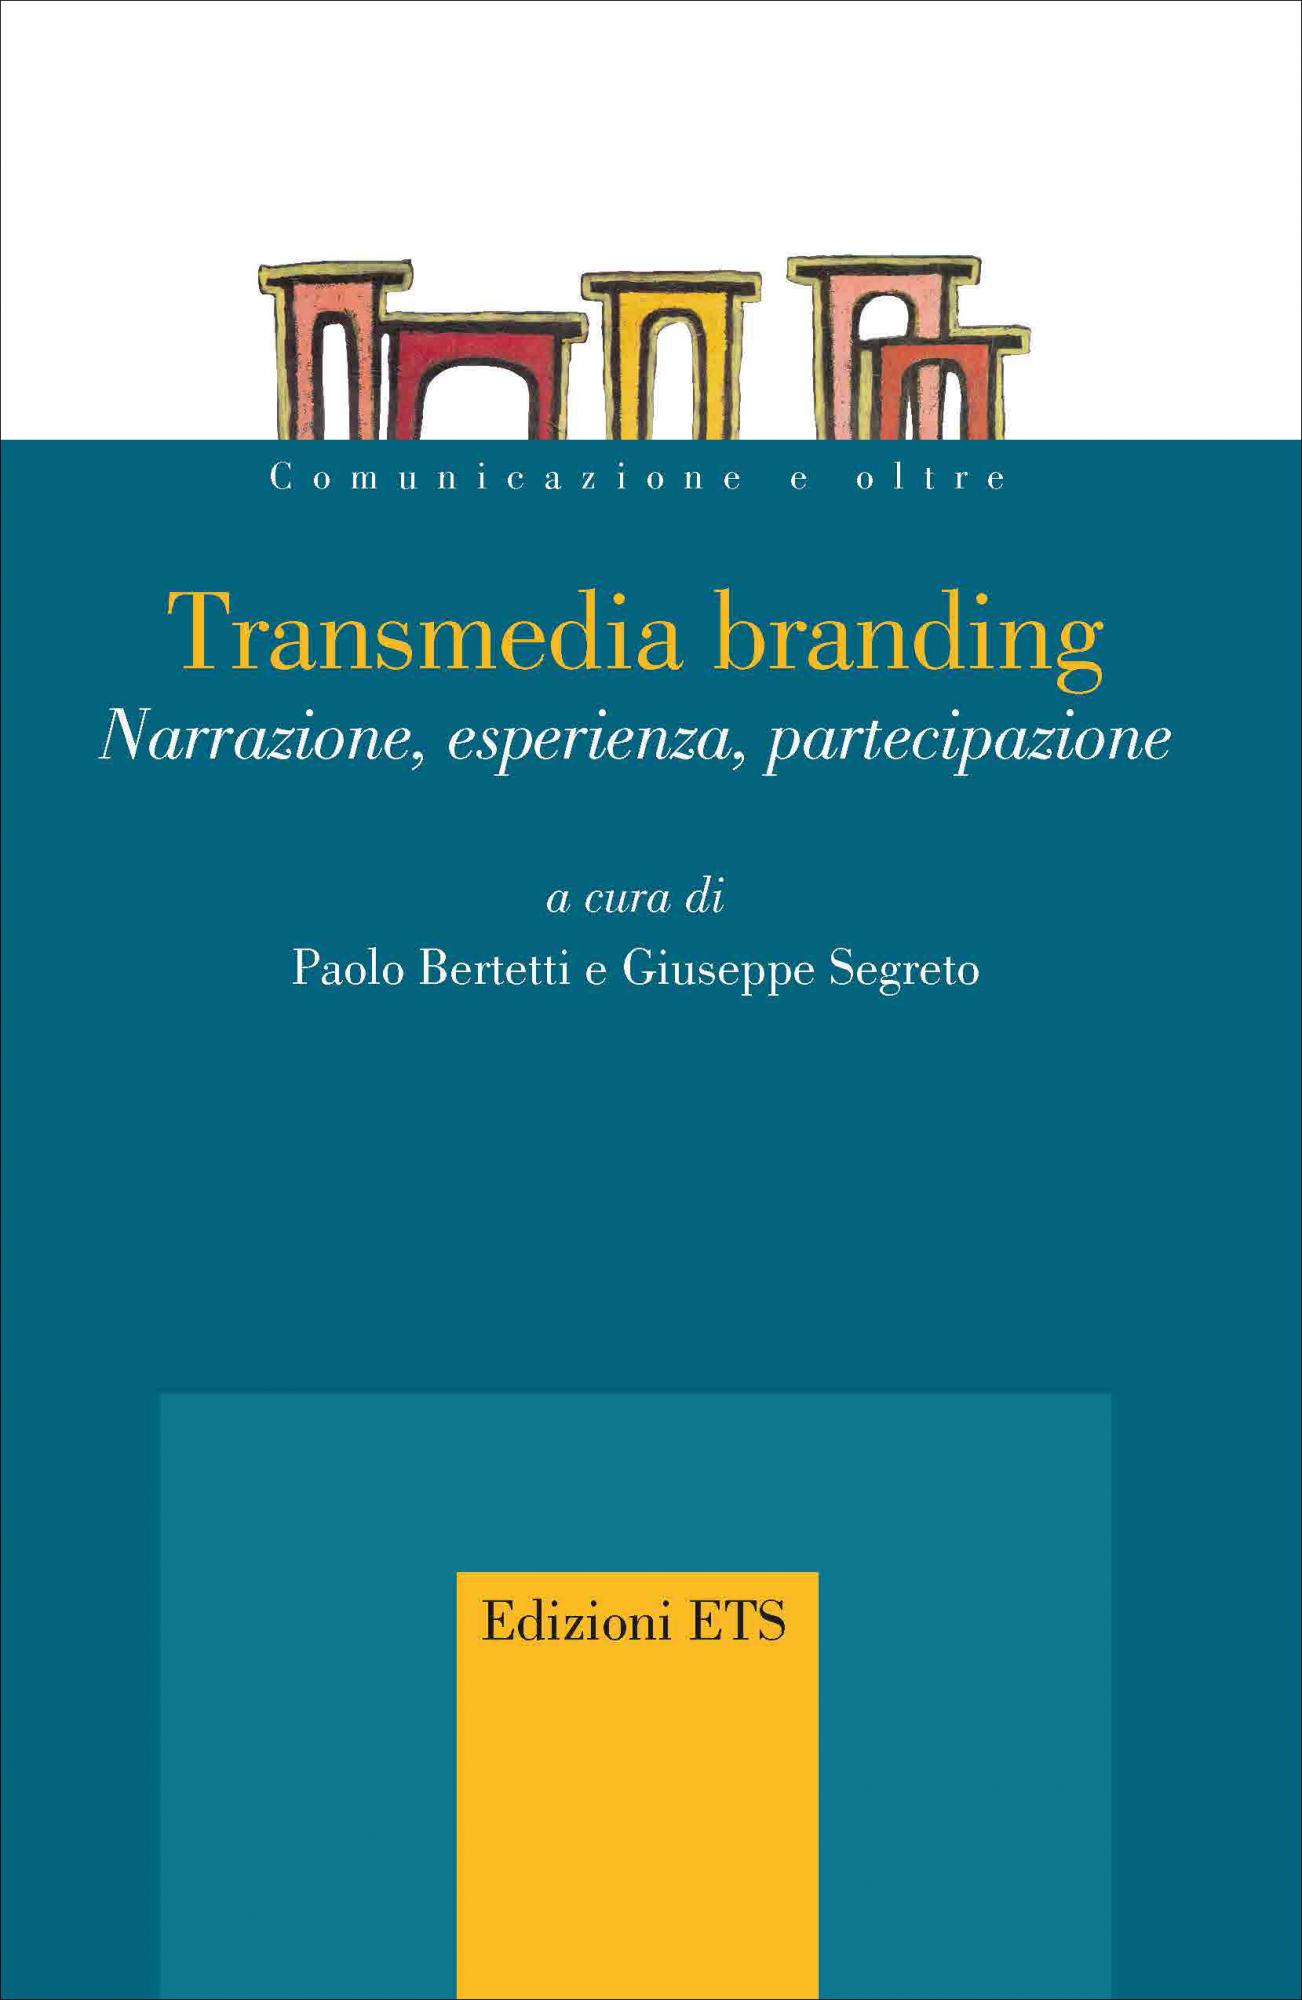 Transmedia branding.Narrazione, esperienza, partecipazione